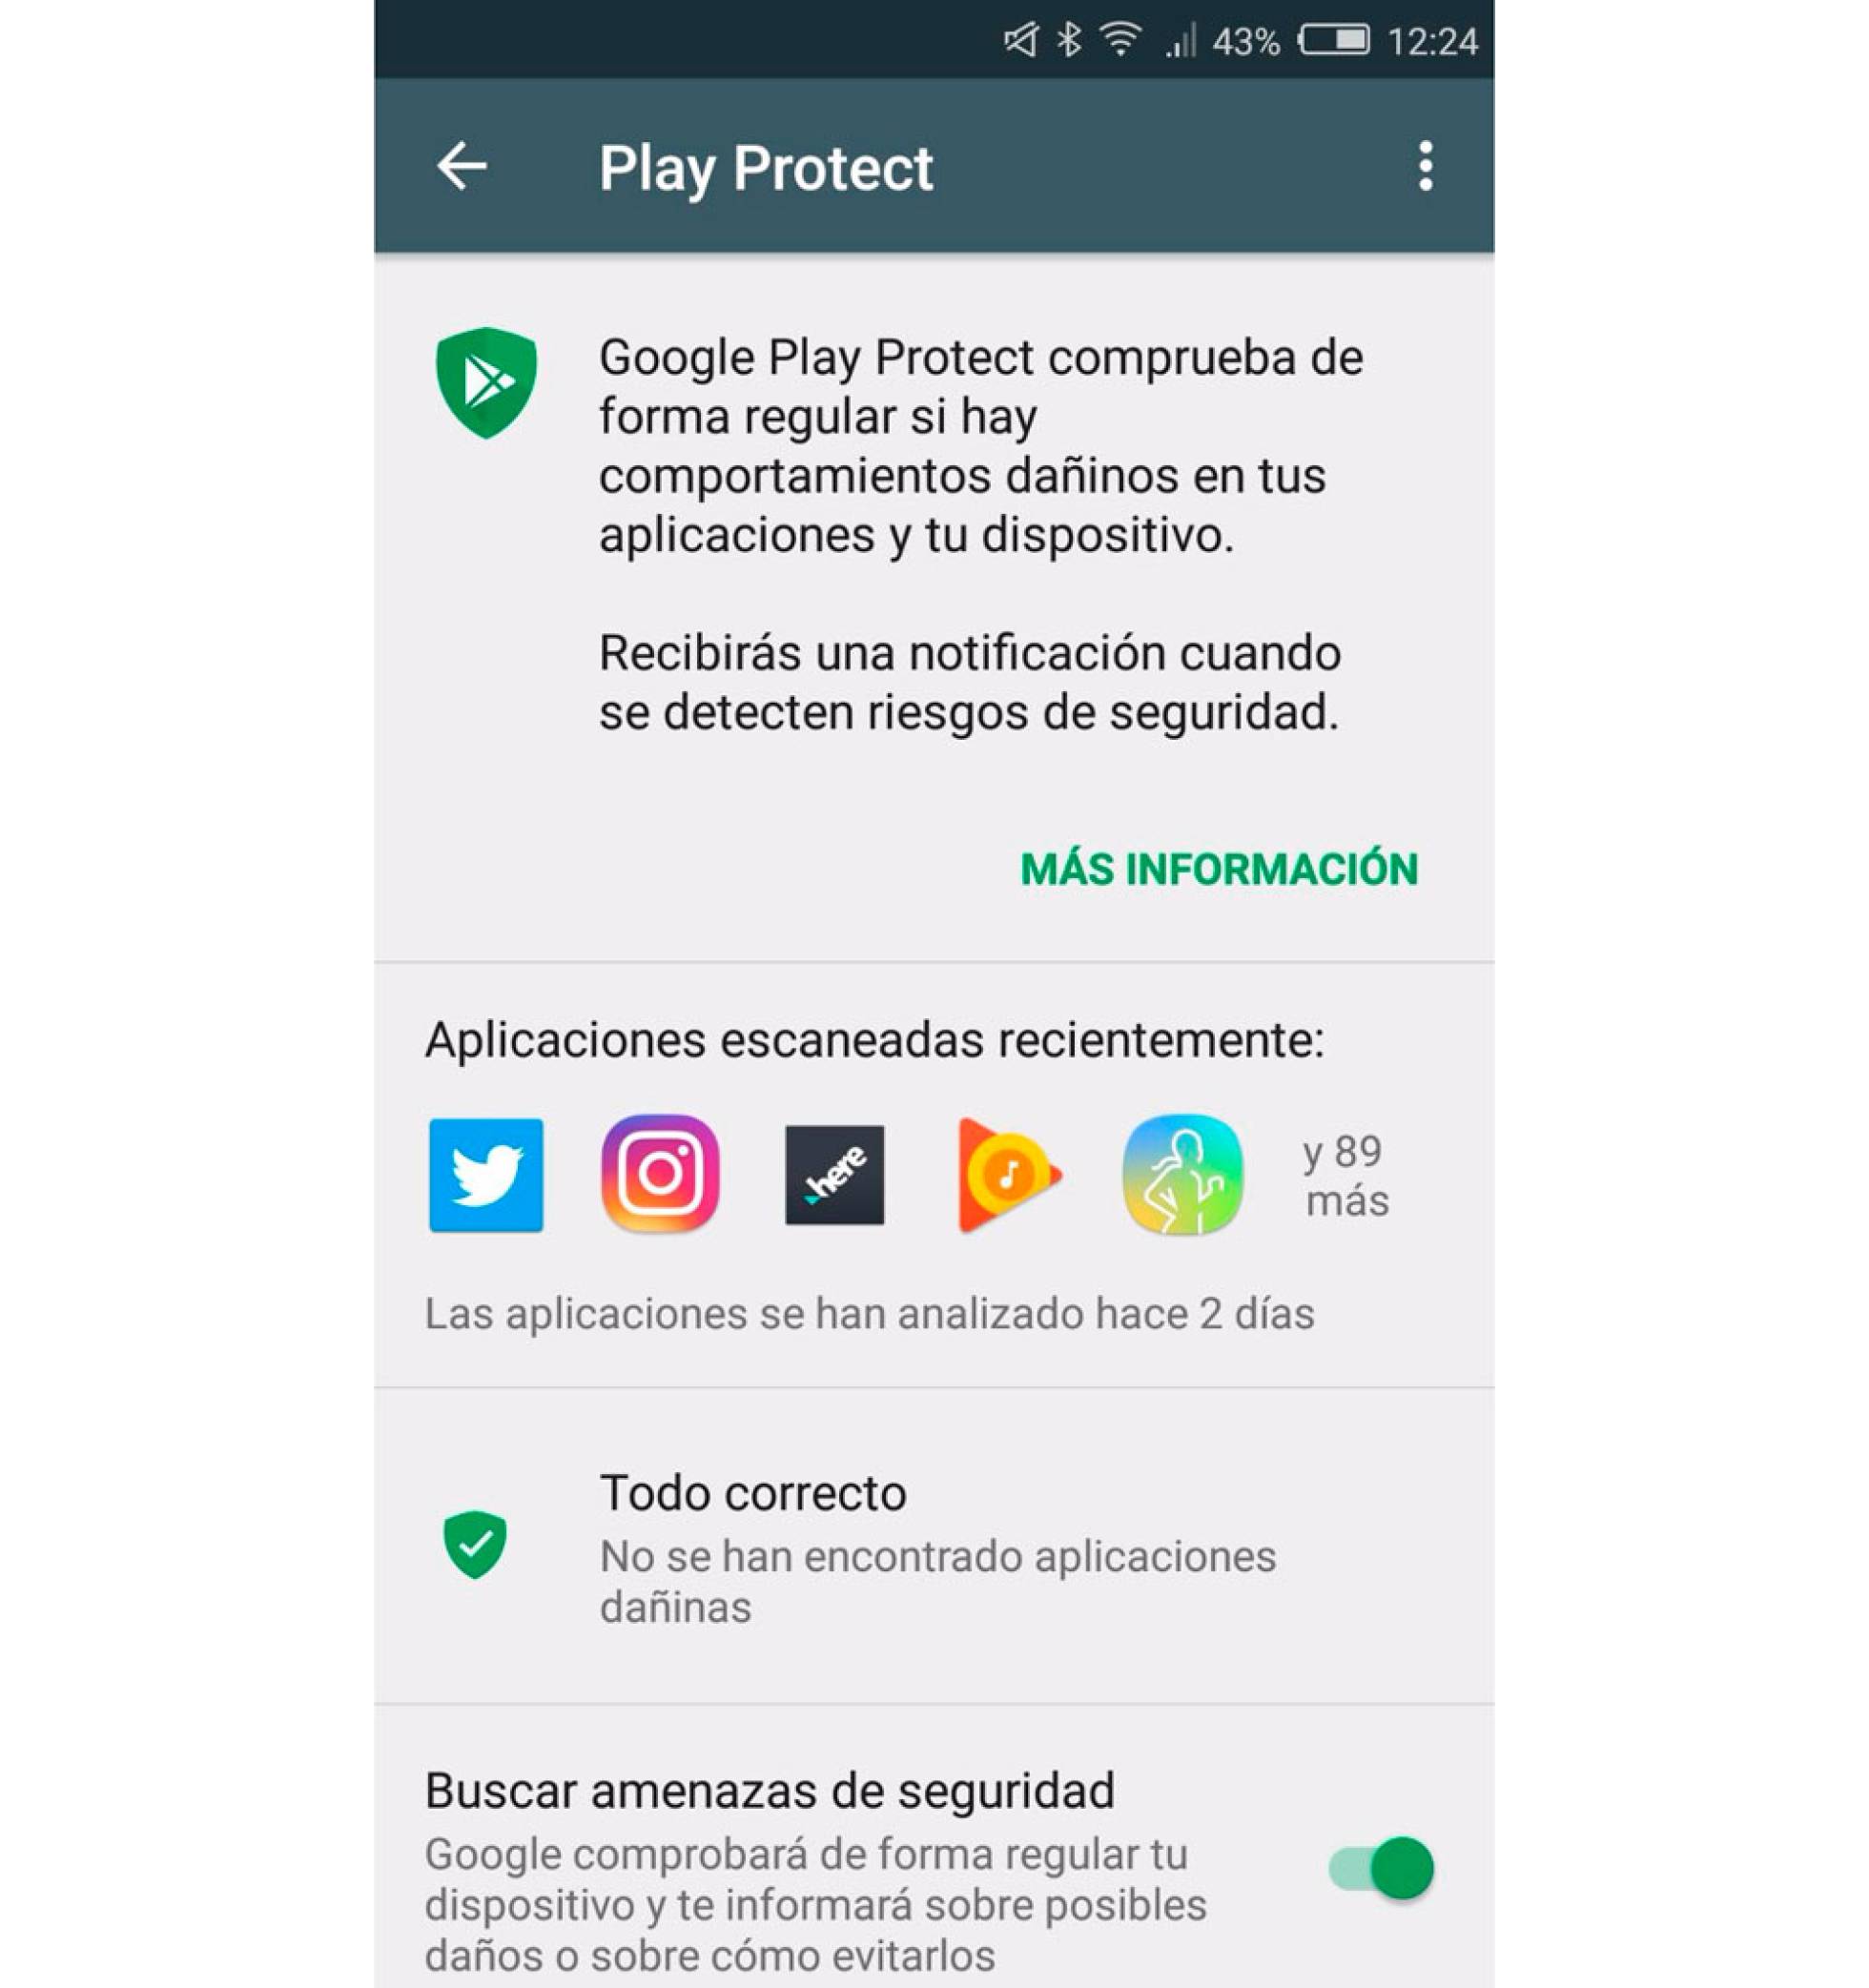 Google Play Protect disponible desde la Play Store